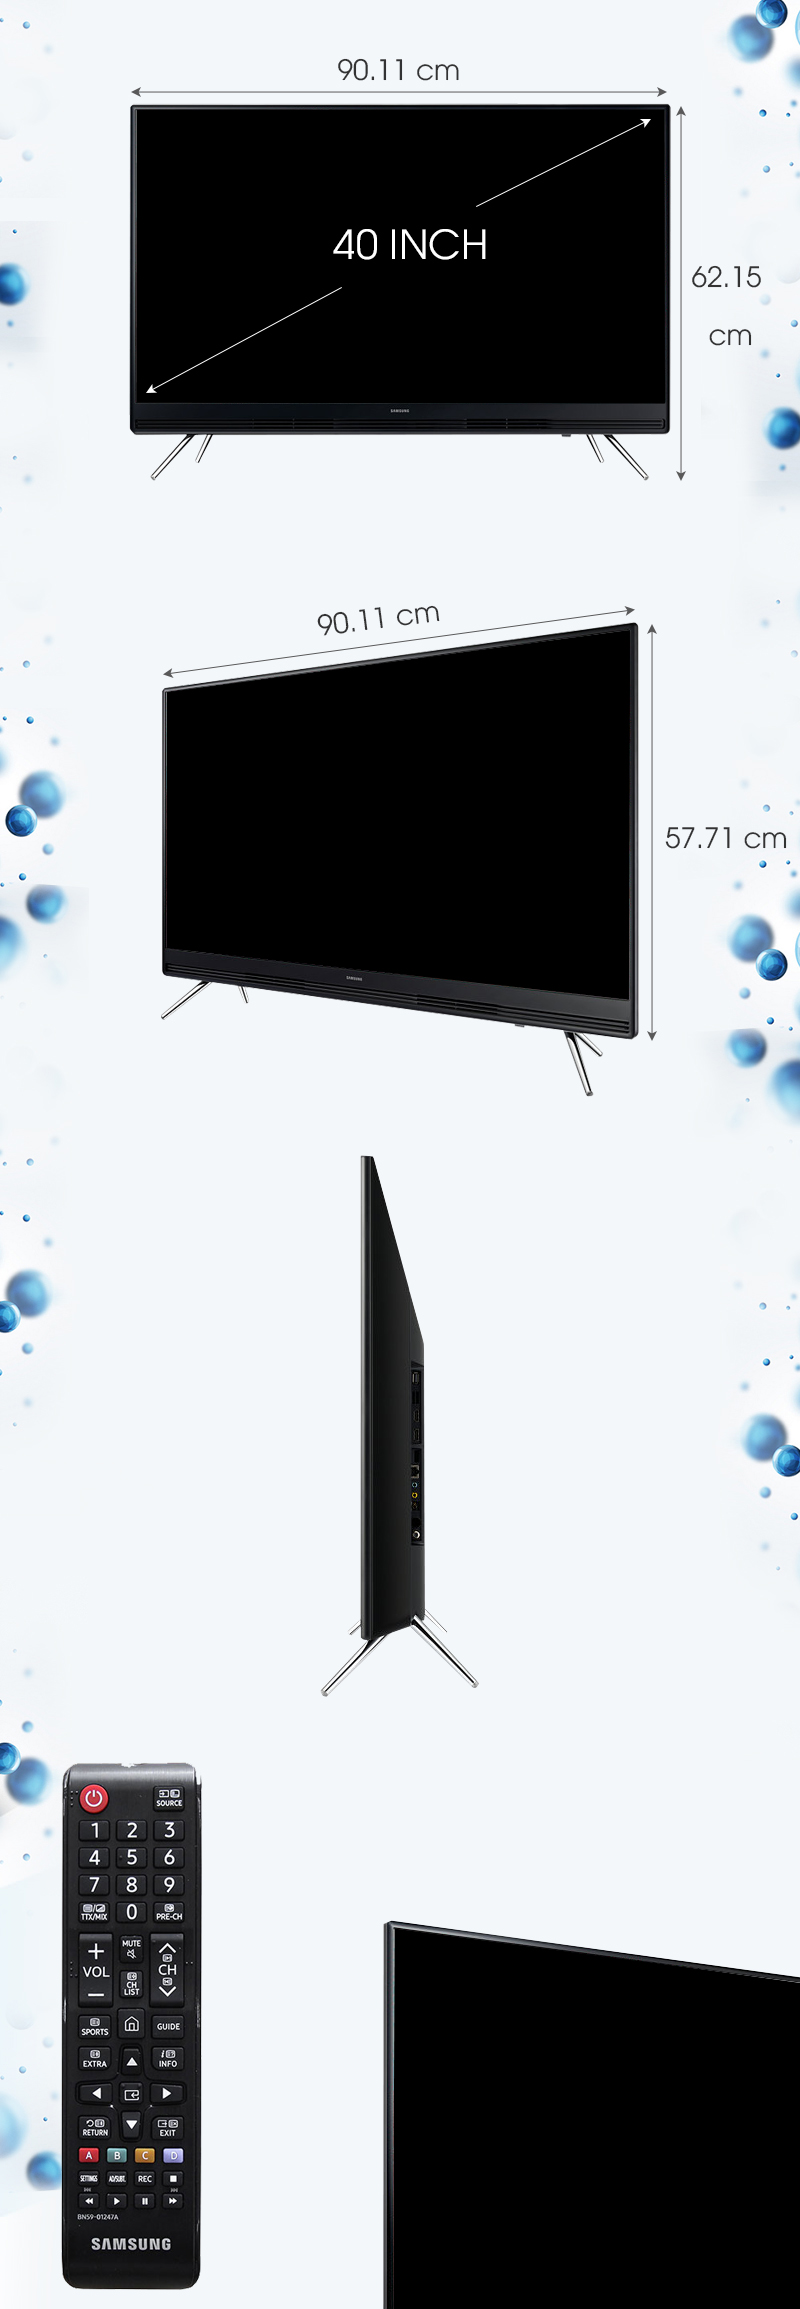 Smart Tivi Samsung 40 inch UA40K5300 - Kích thước tivi